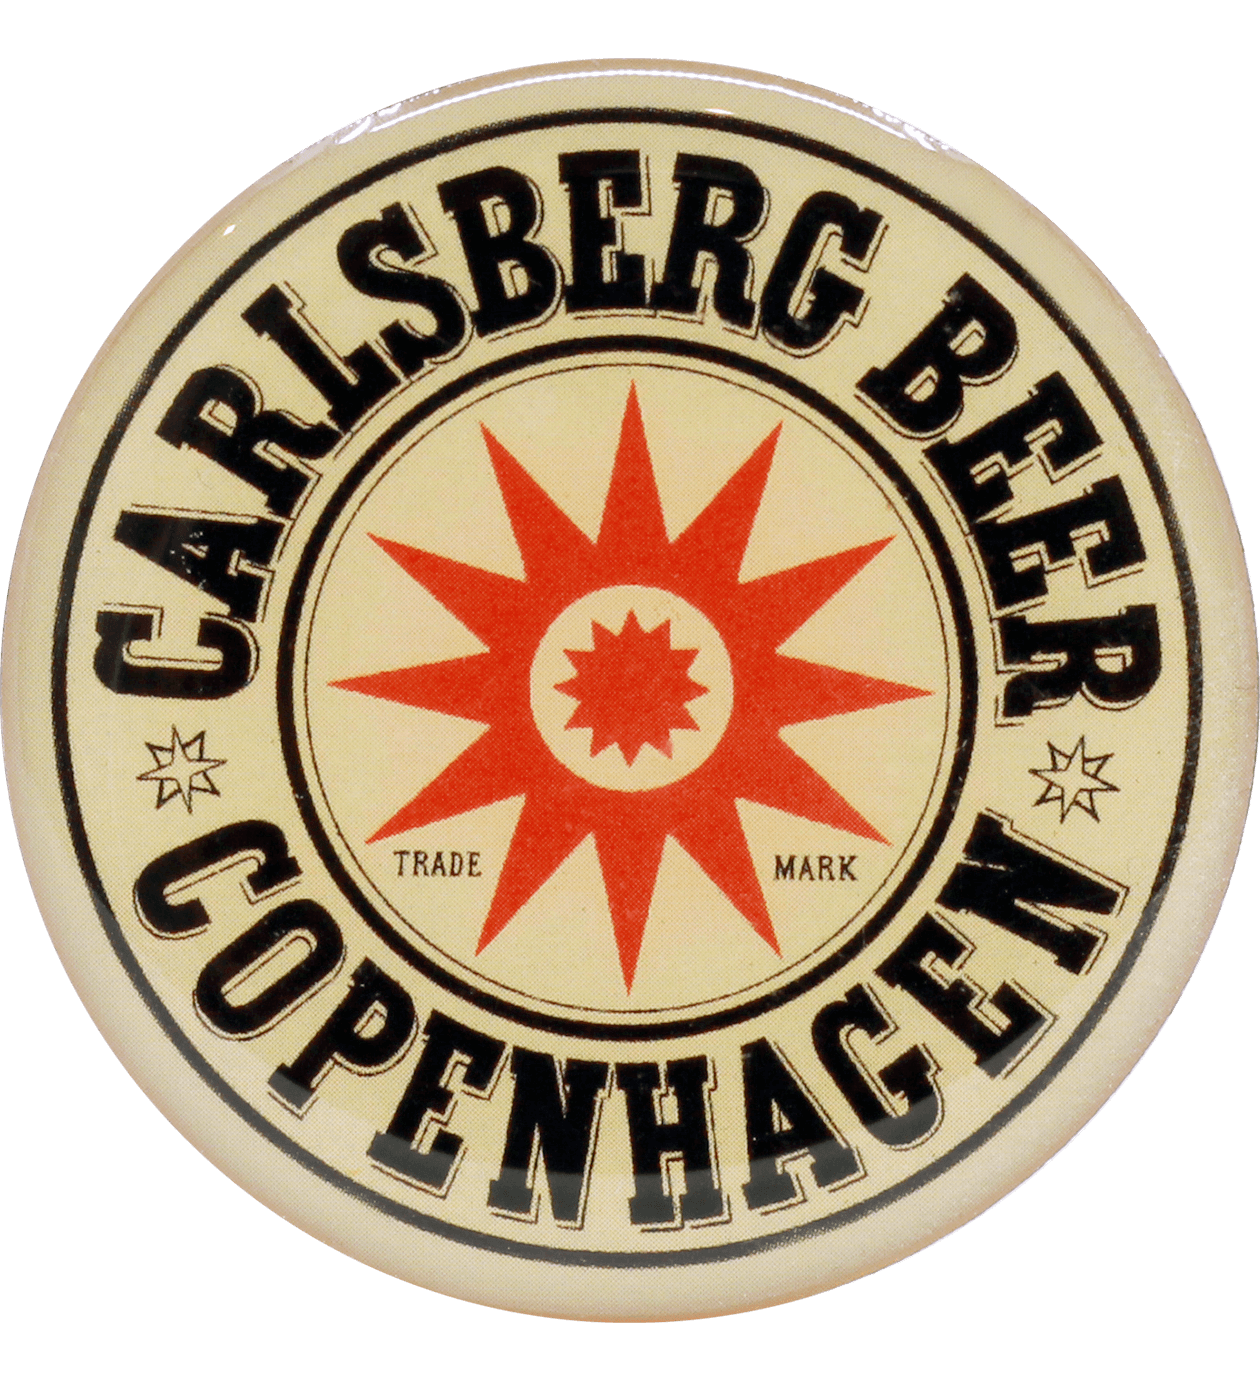 Carlsberg Stjerne - Carlsberg Store